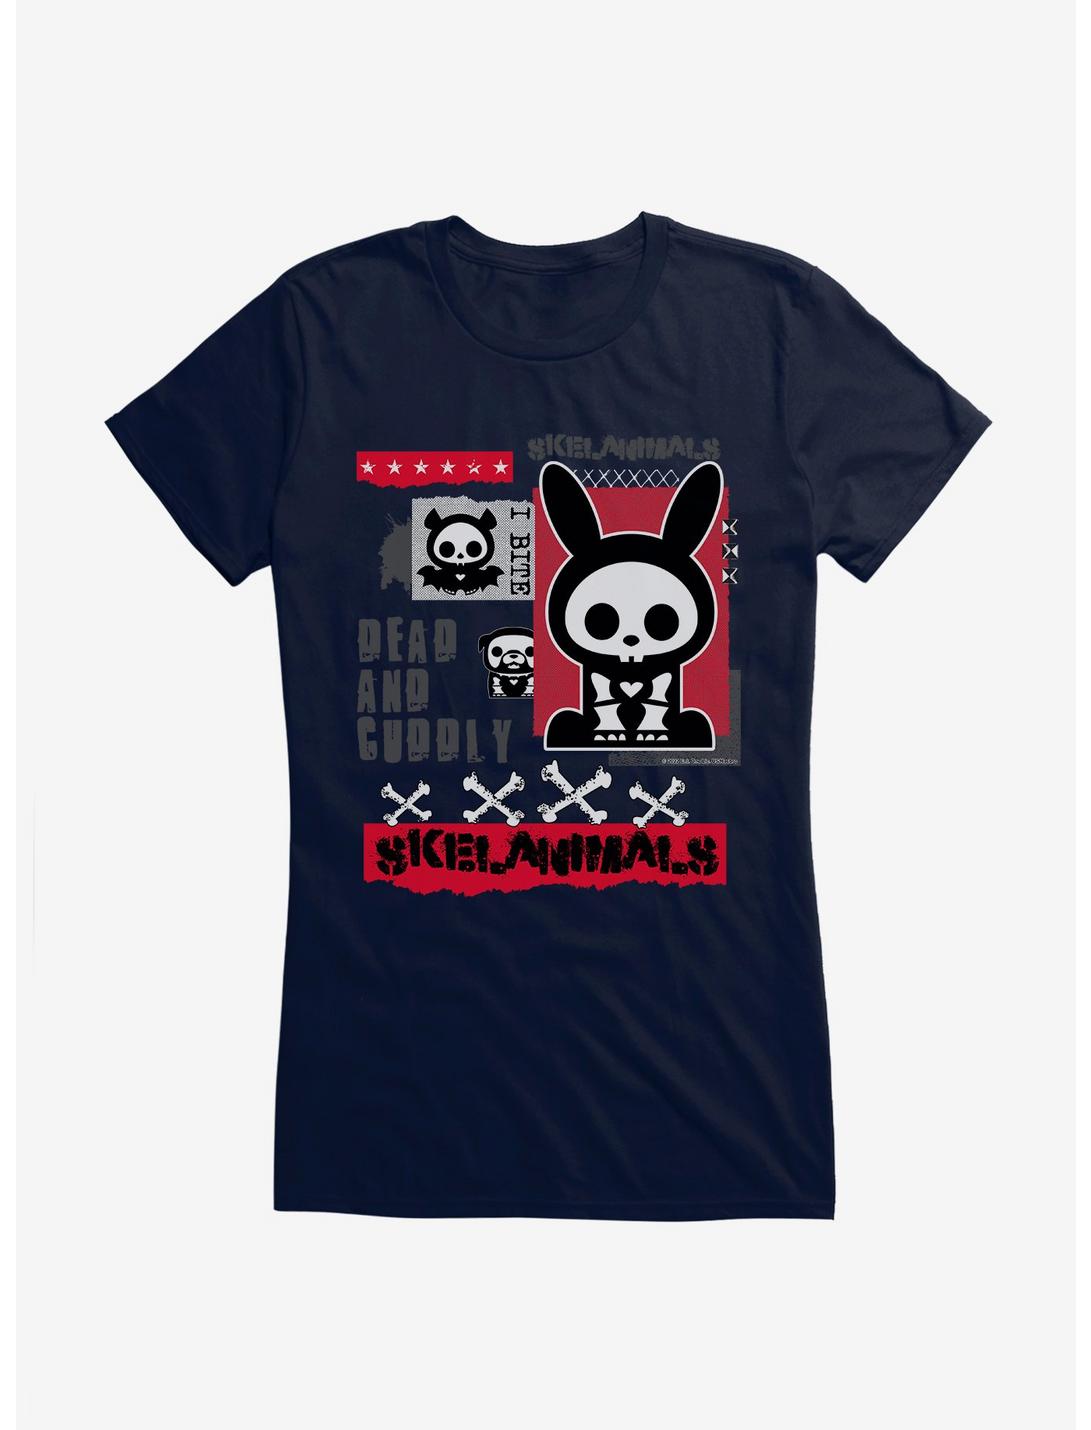 Skelanimals Dead And Cuddly Girls T-Shirt, , hi-res